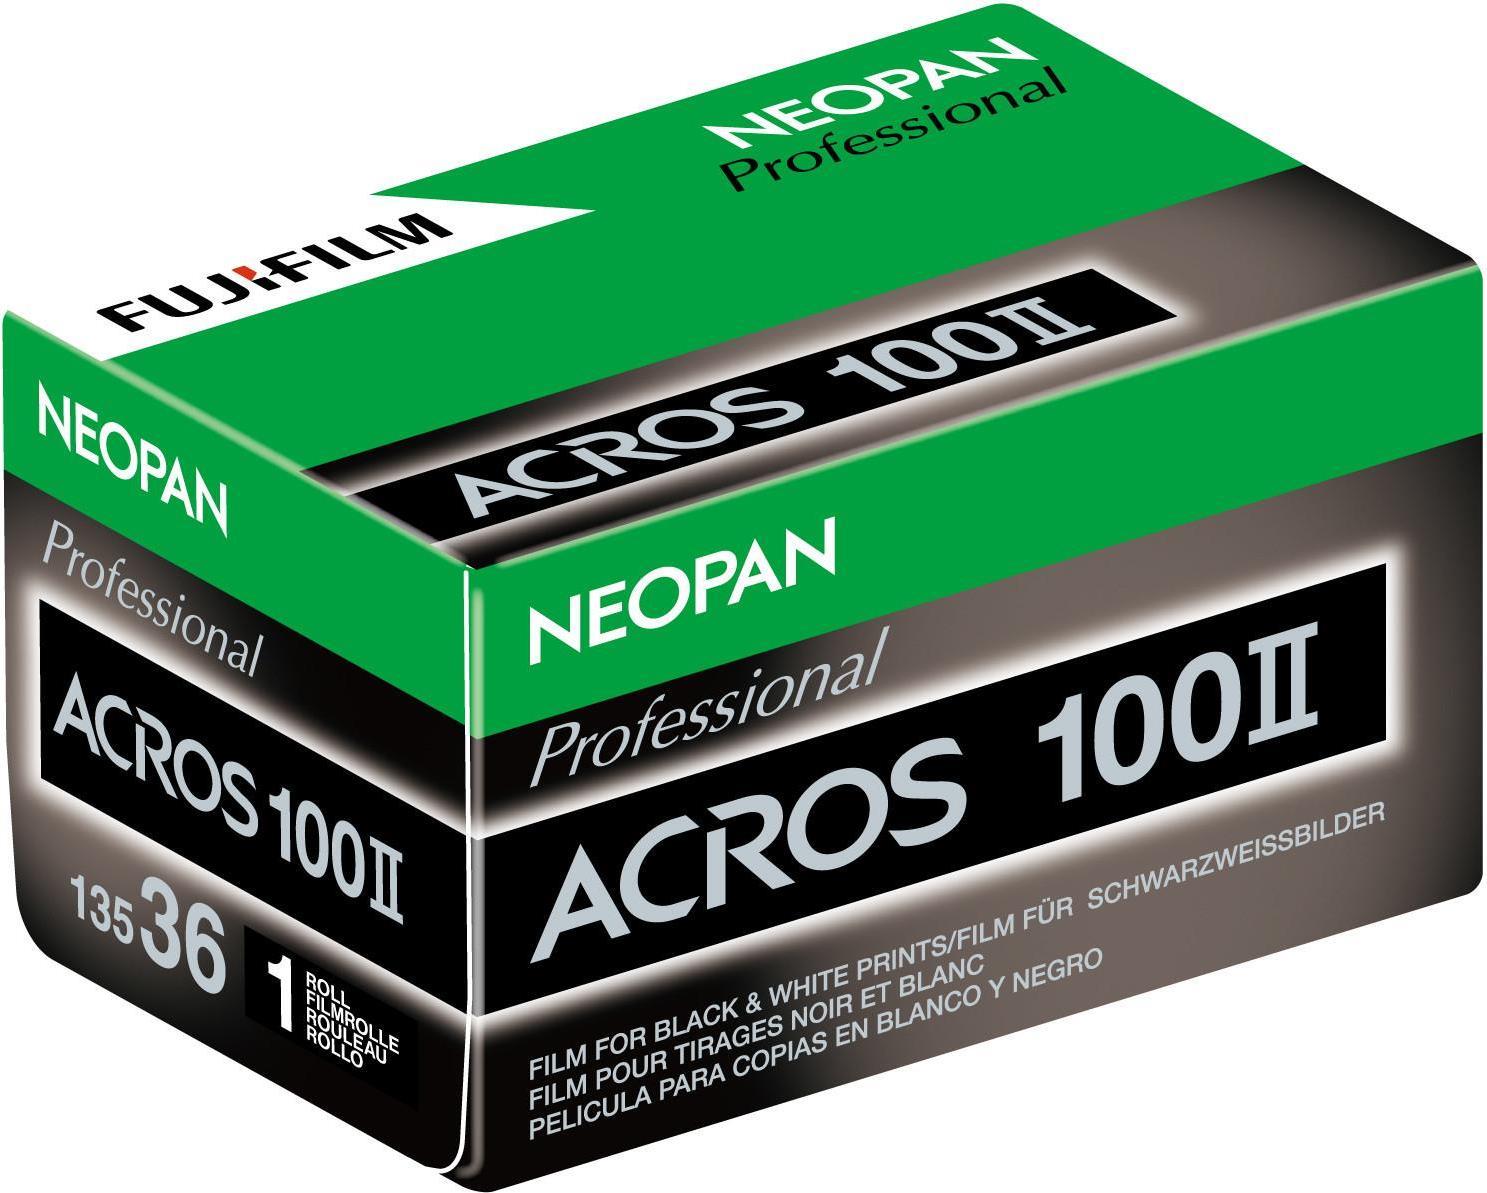 1 film Neopan Acros 100 II 135/36 (16648282)